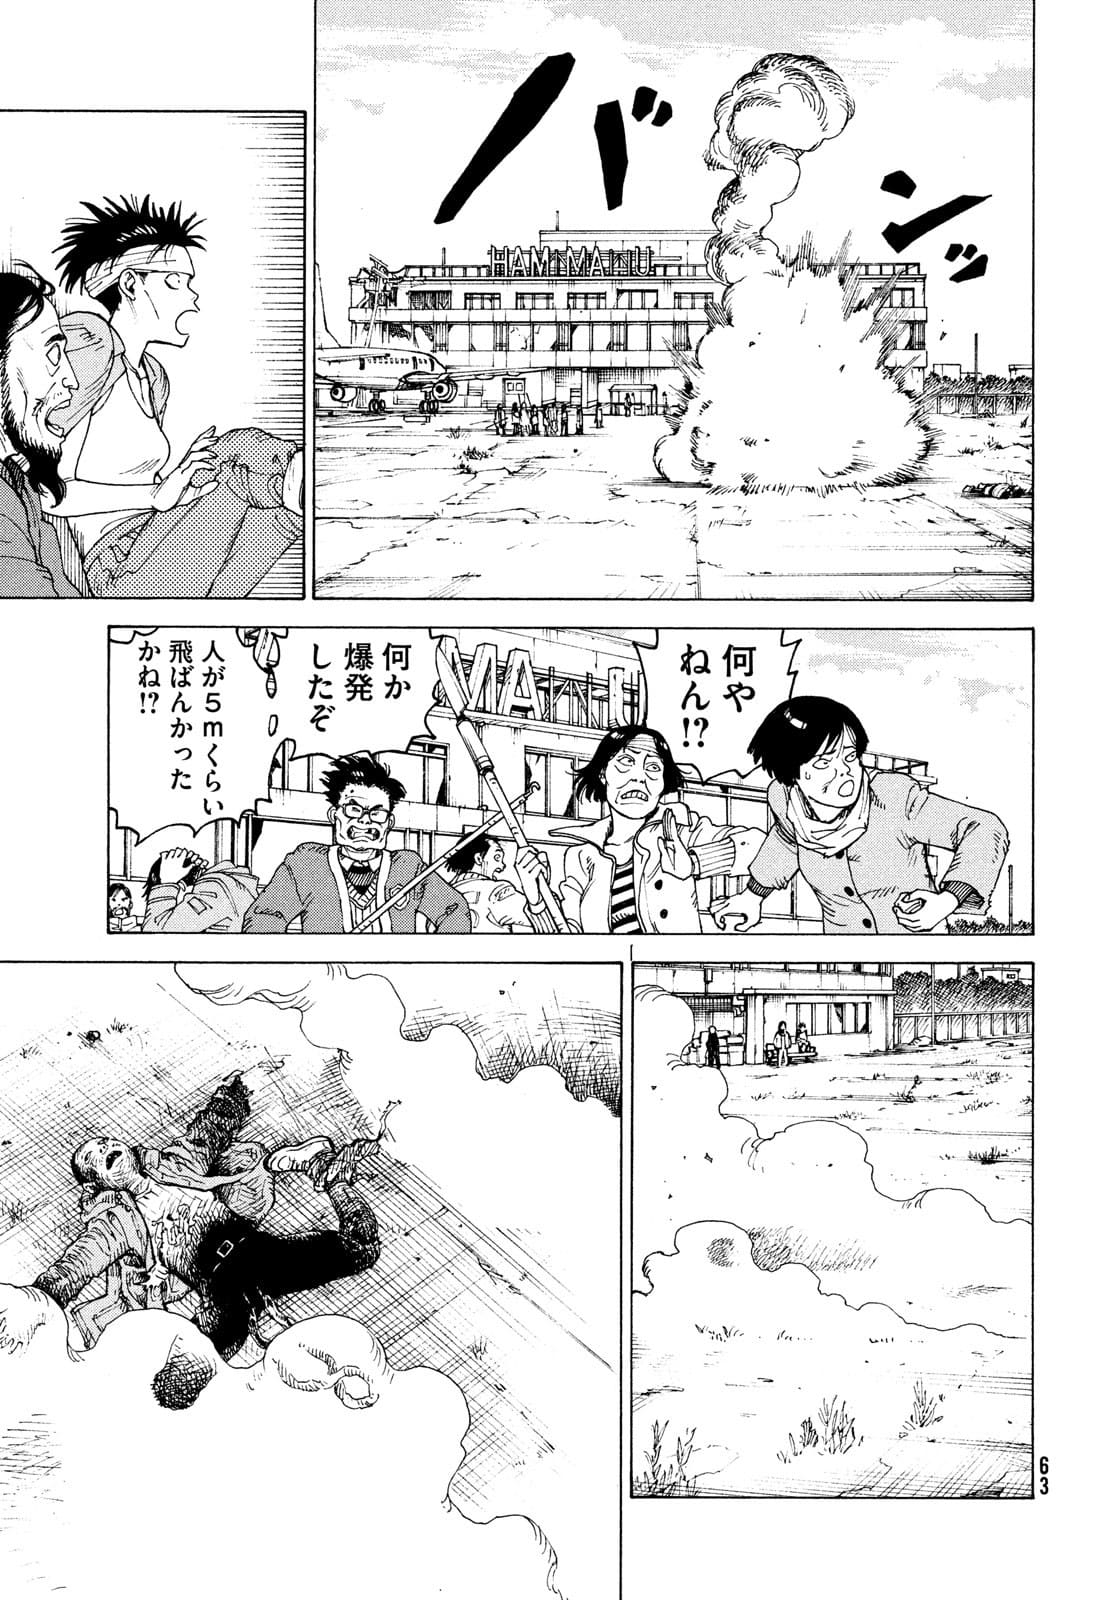 Read Tengoku Daimakyou 40 - Oni Scan